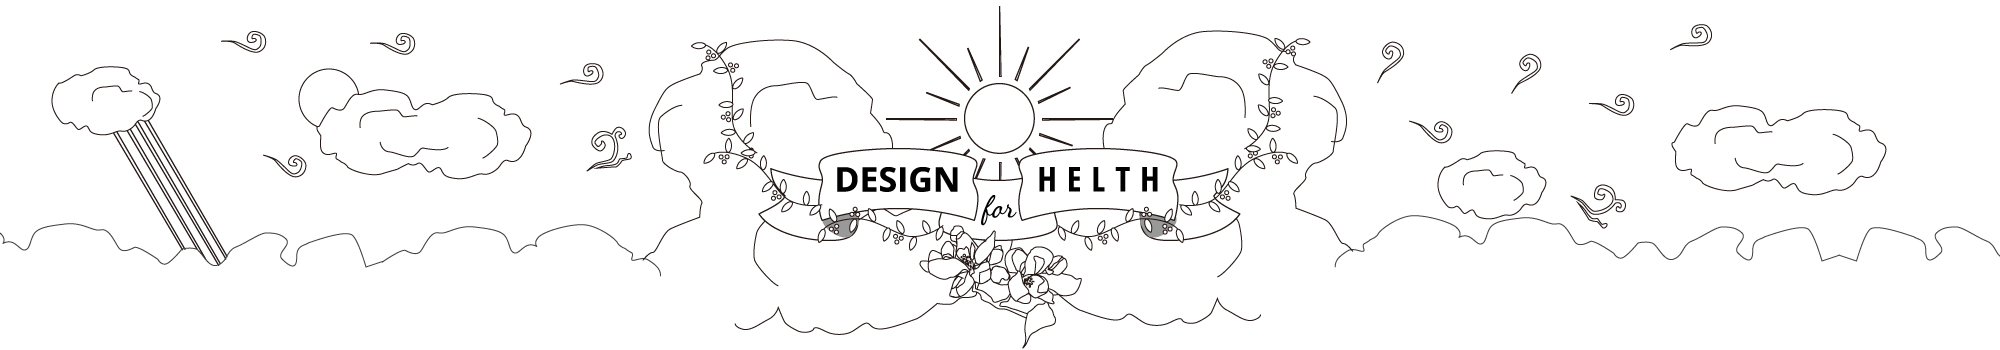 DESIGN FOR HELTH